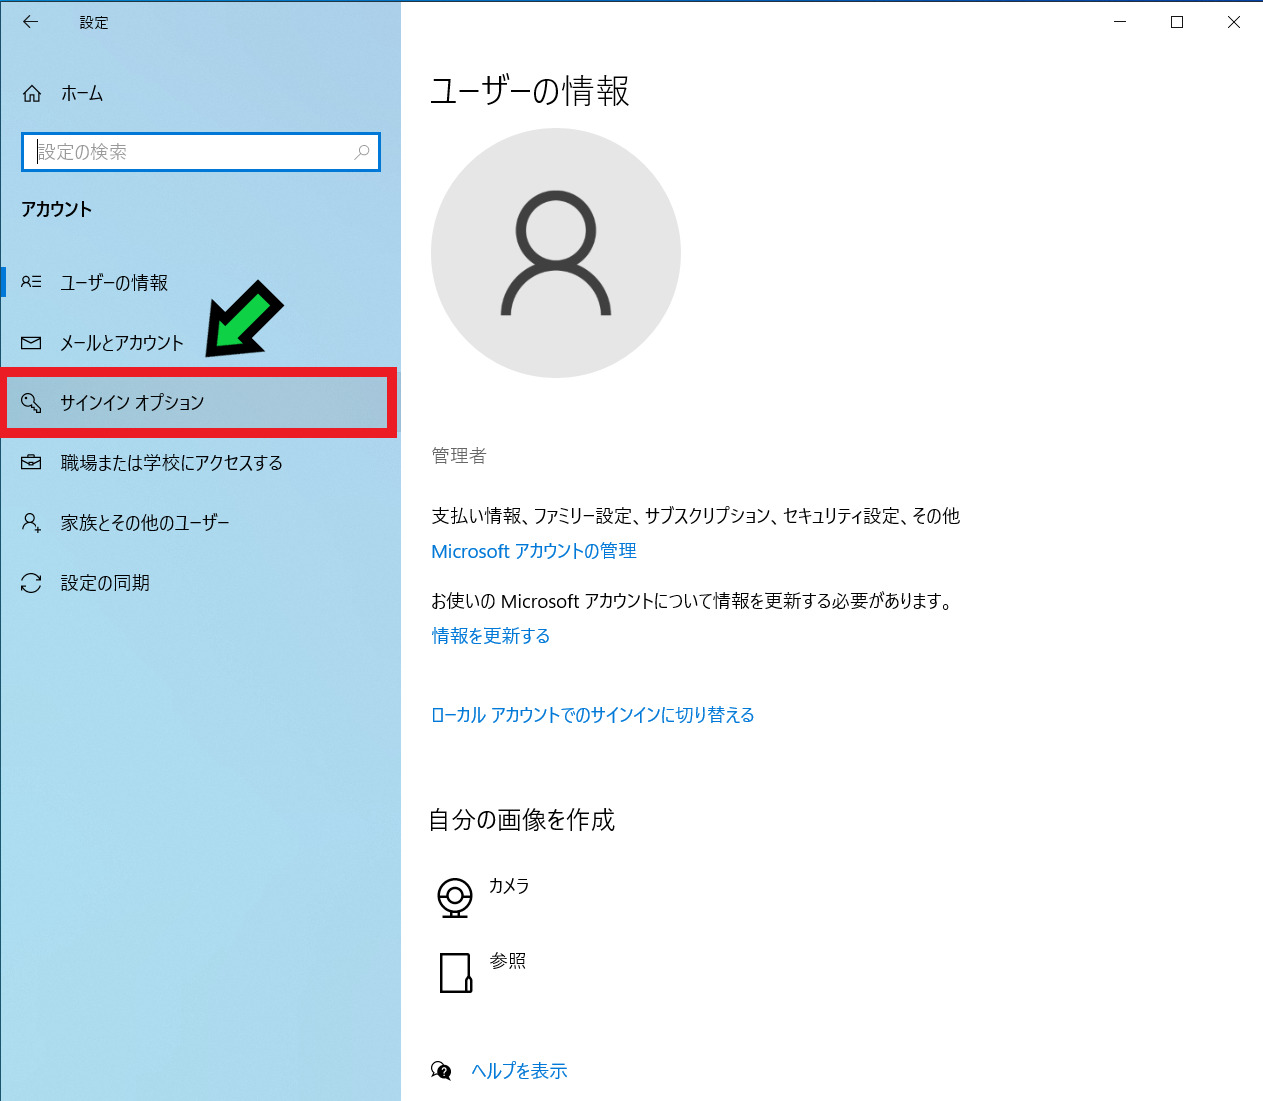 【Windows Hello】パソコンの顔認証をマスク姿でも登録させる方法【Windows10】